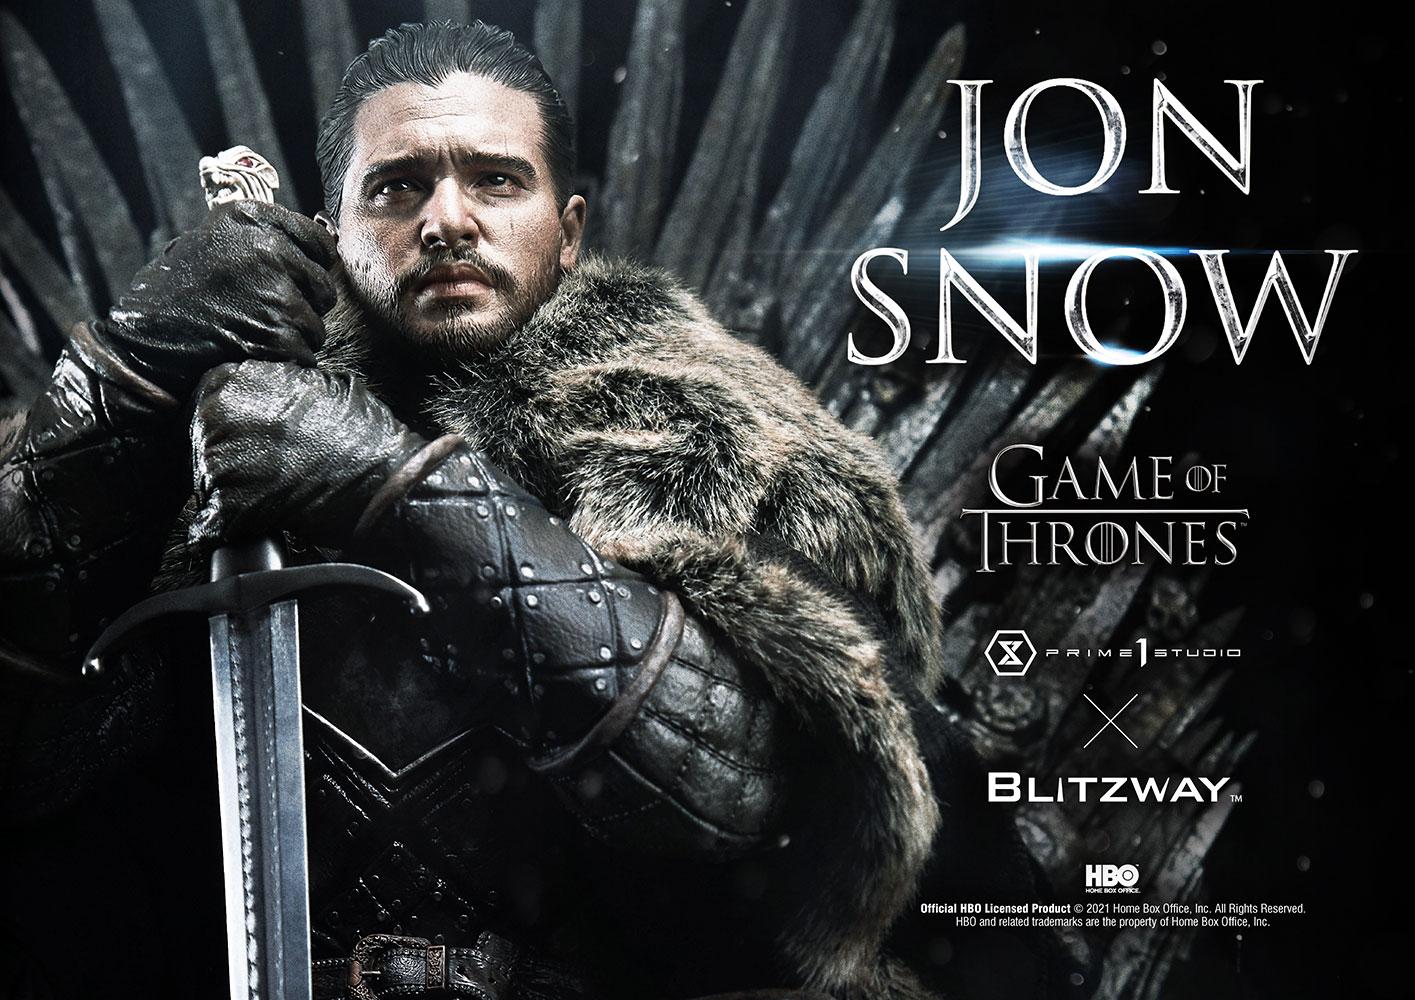 Game of Thrones Jon Snow Statue